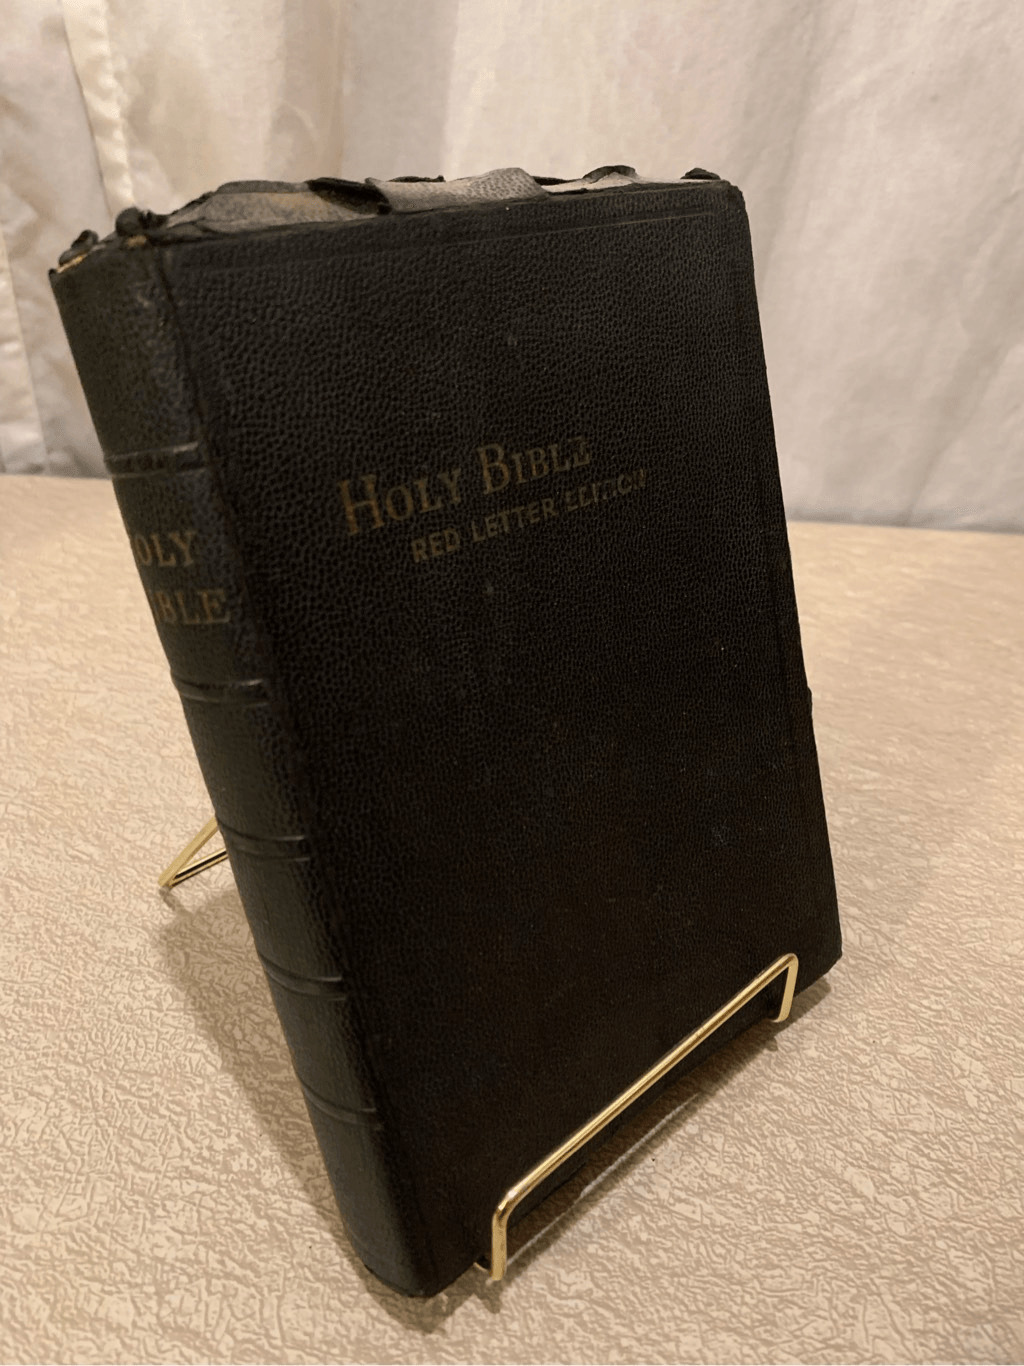 Holy Bible Red Letter Edition KJV World Publishing Appr. 1920-1950